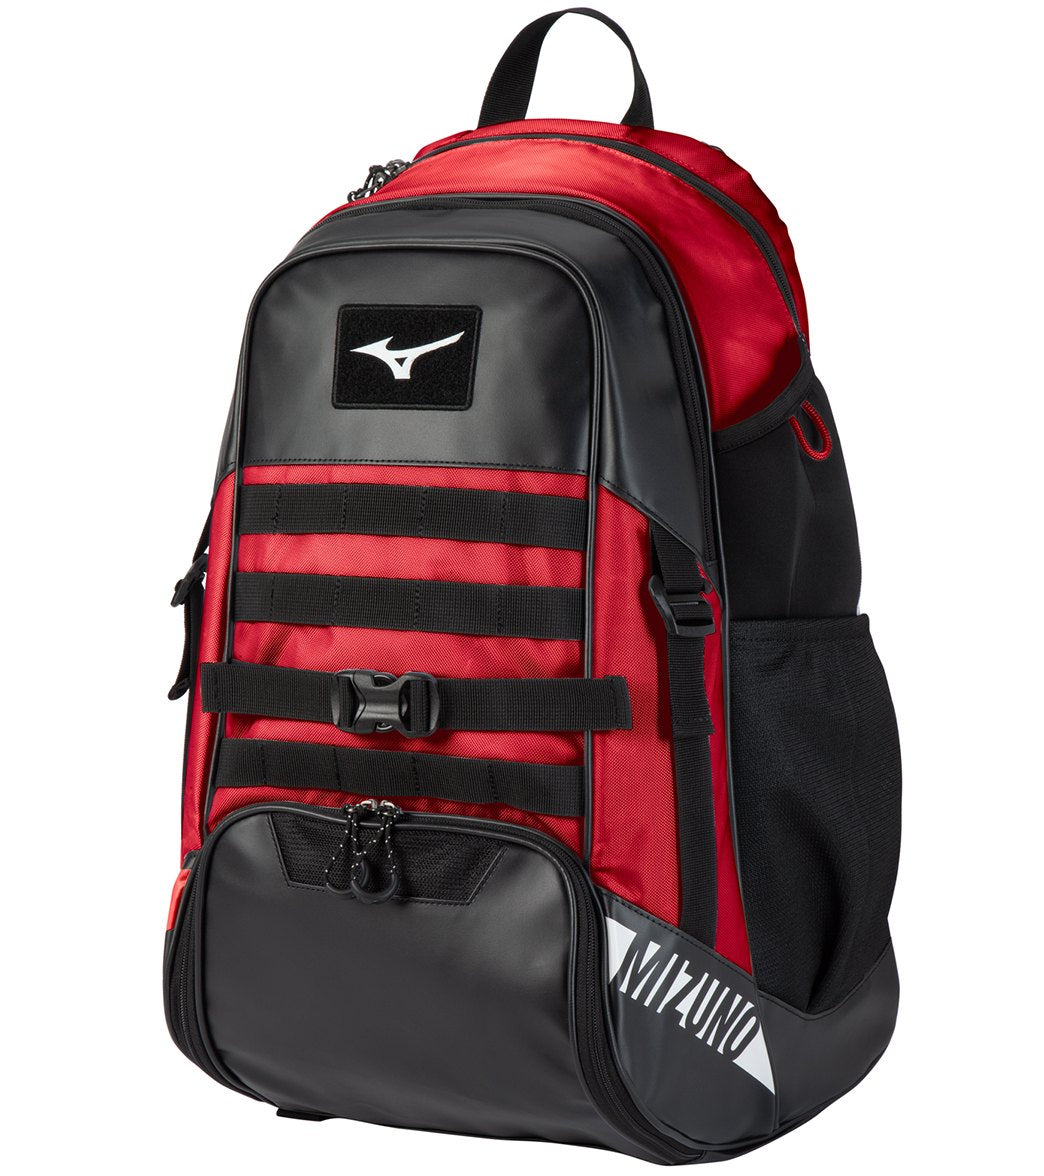 Mizuno Mvp X Backpack - Black-Red Black/Red - Swimoutlet.com